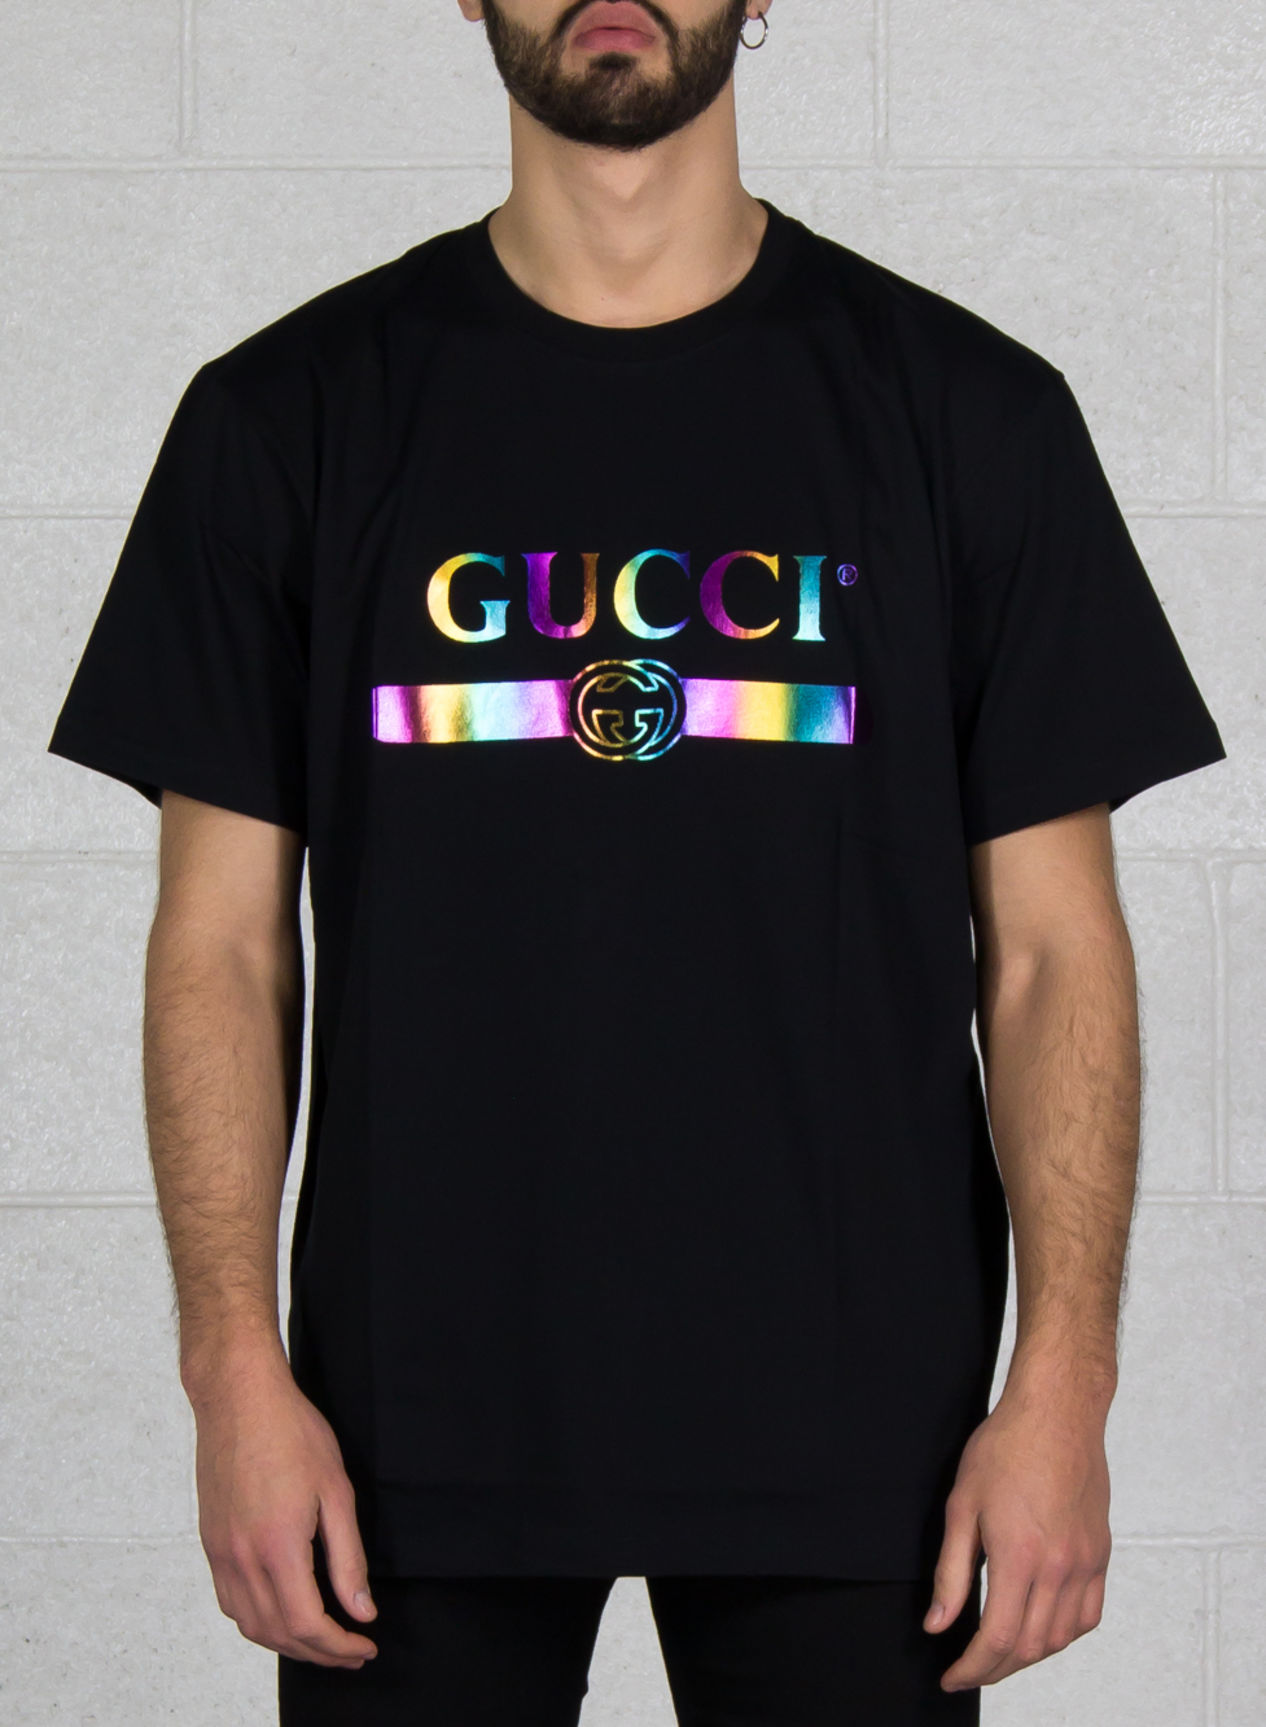 gucci holographic shirt